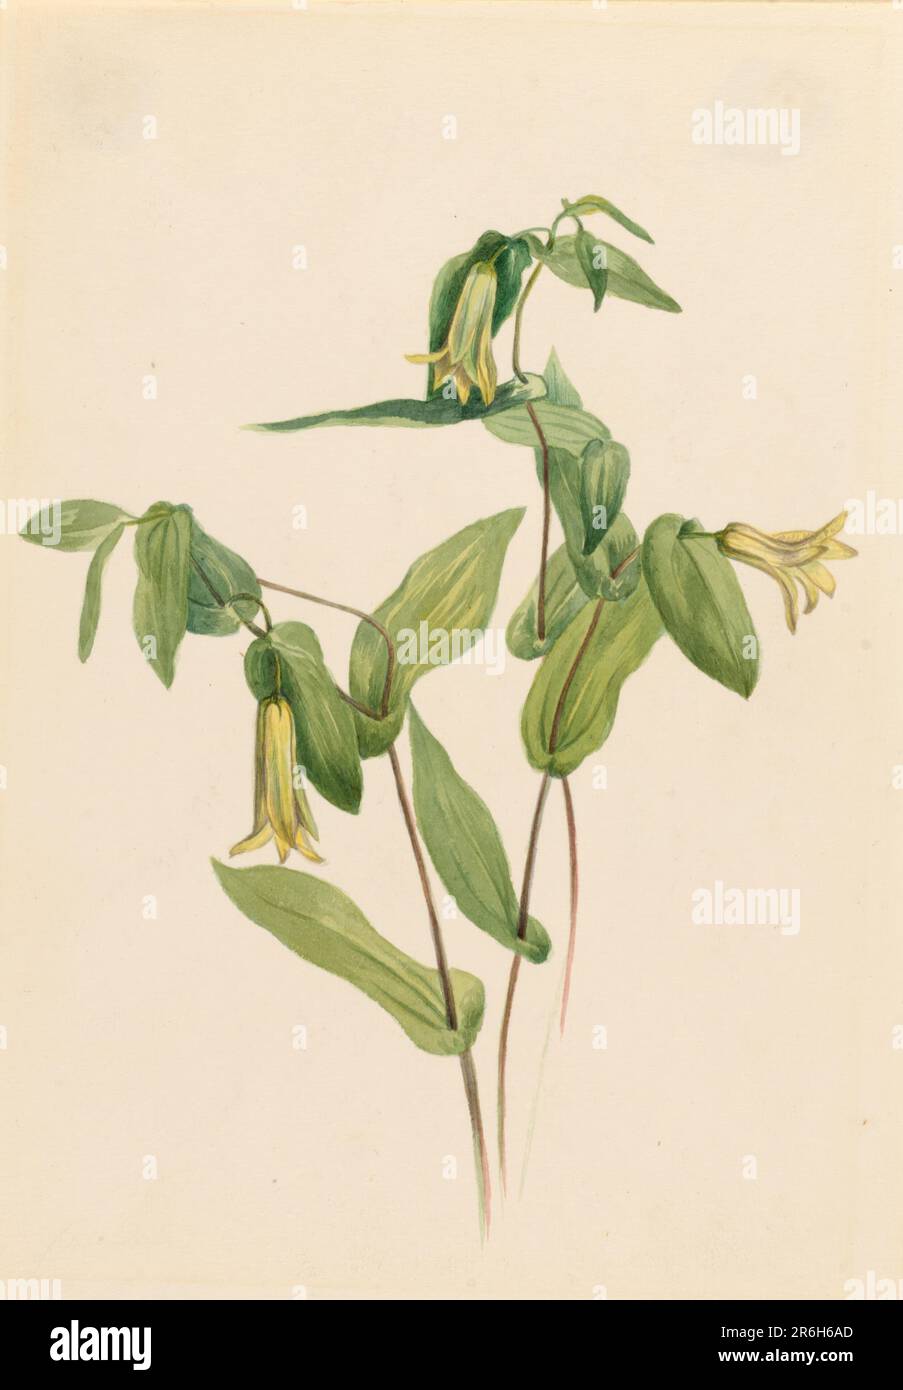 Wood Merrybells (Uvularia perfoliata). Date: n.d. Watercolor on paper. Museum: Smithsonian American Art Museum. Stock Photo